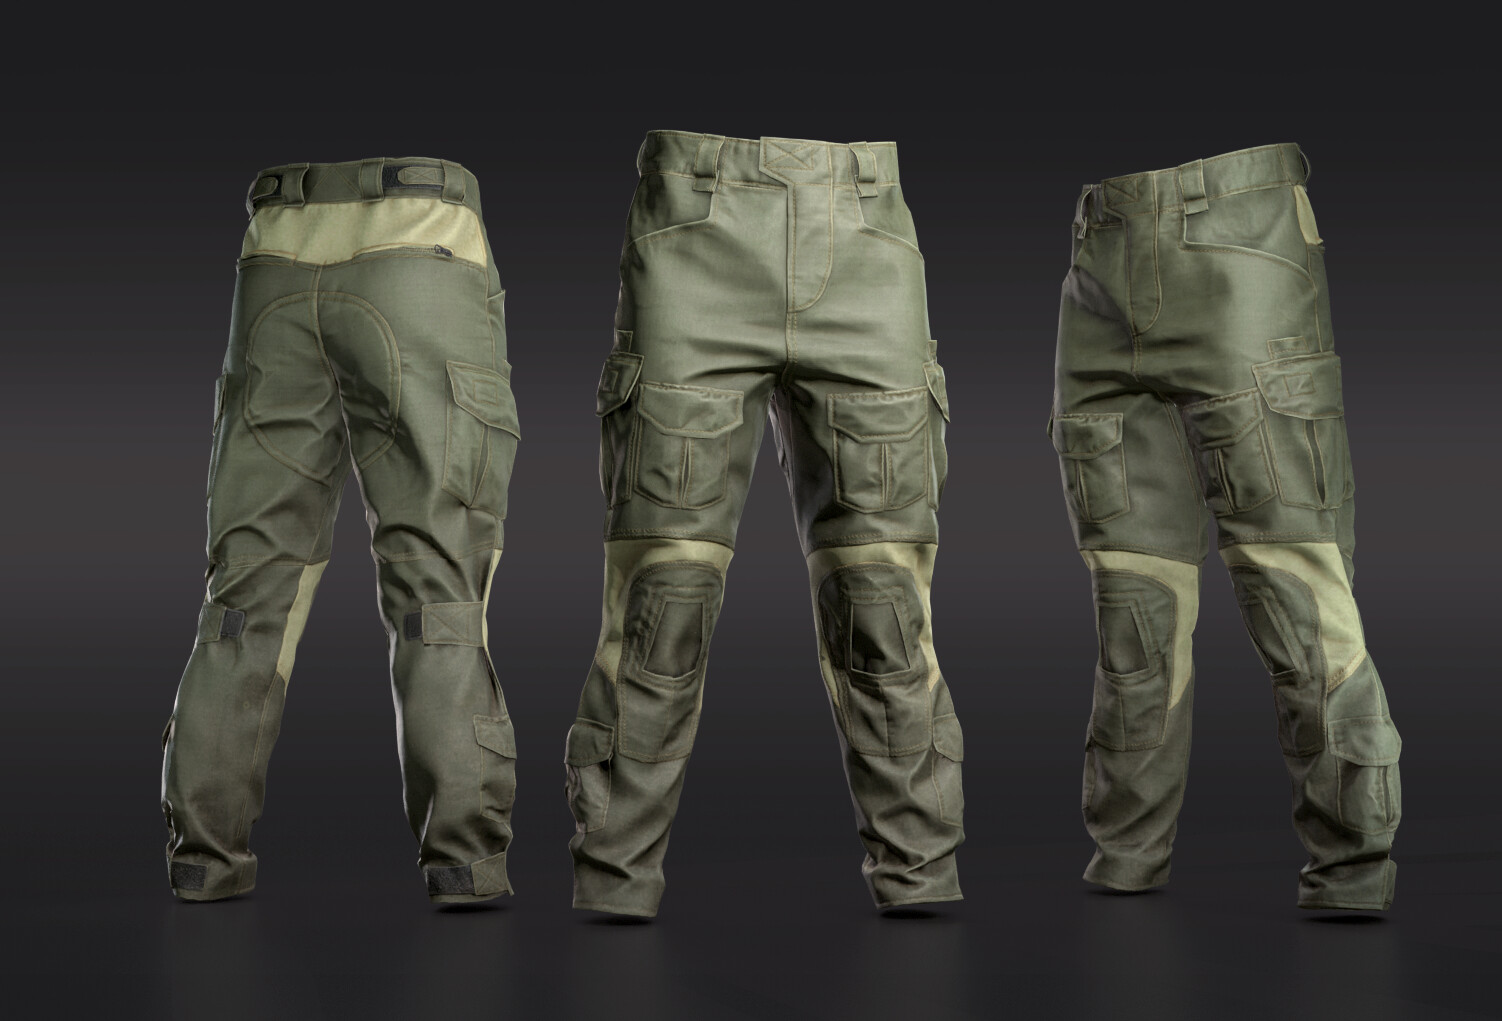 ArtStation - Military pants